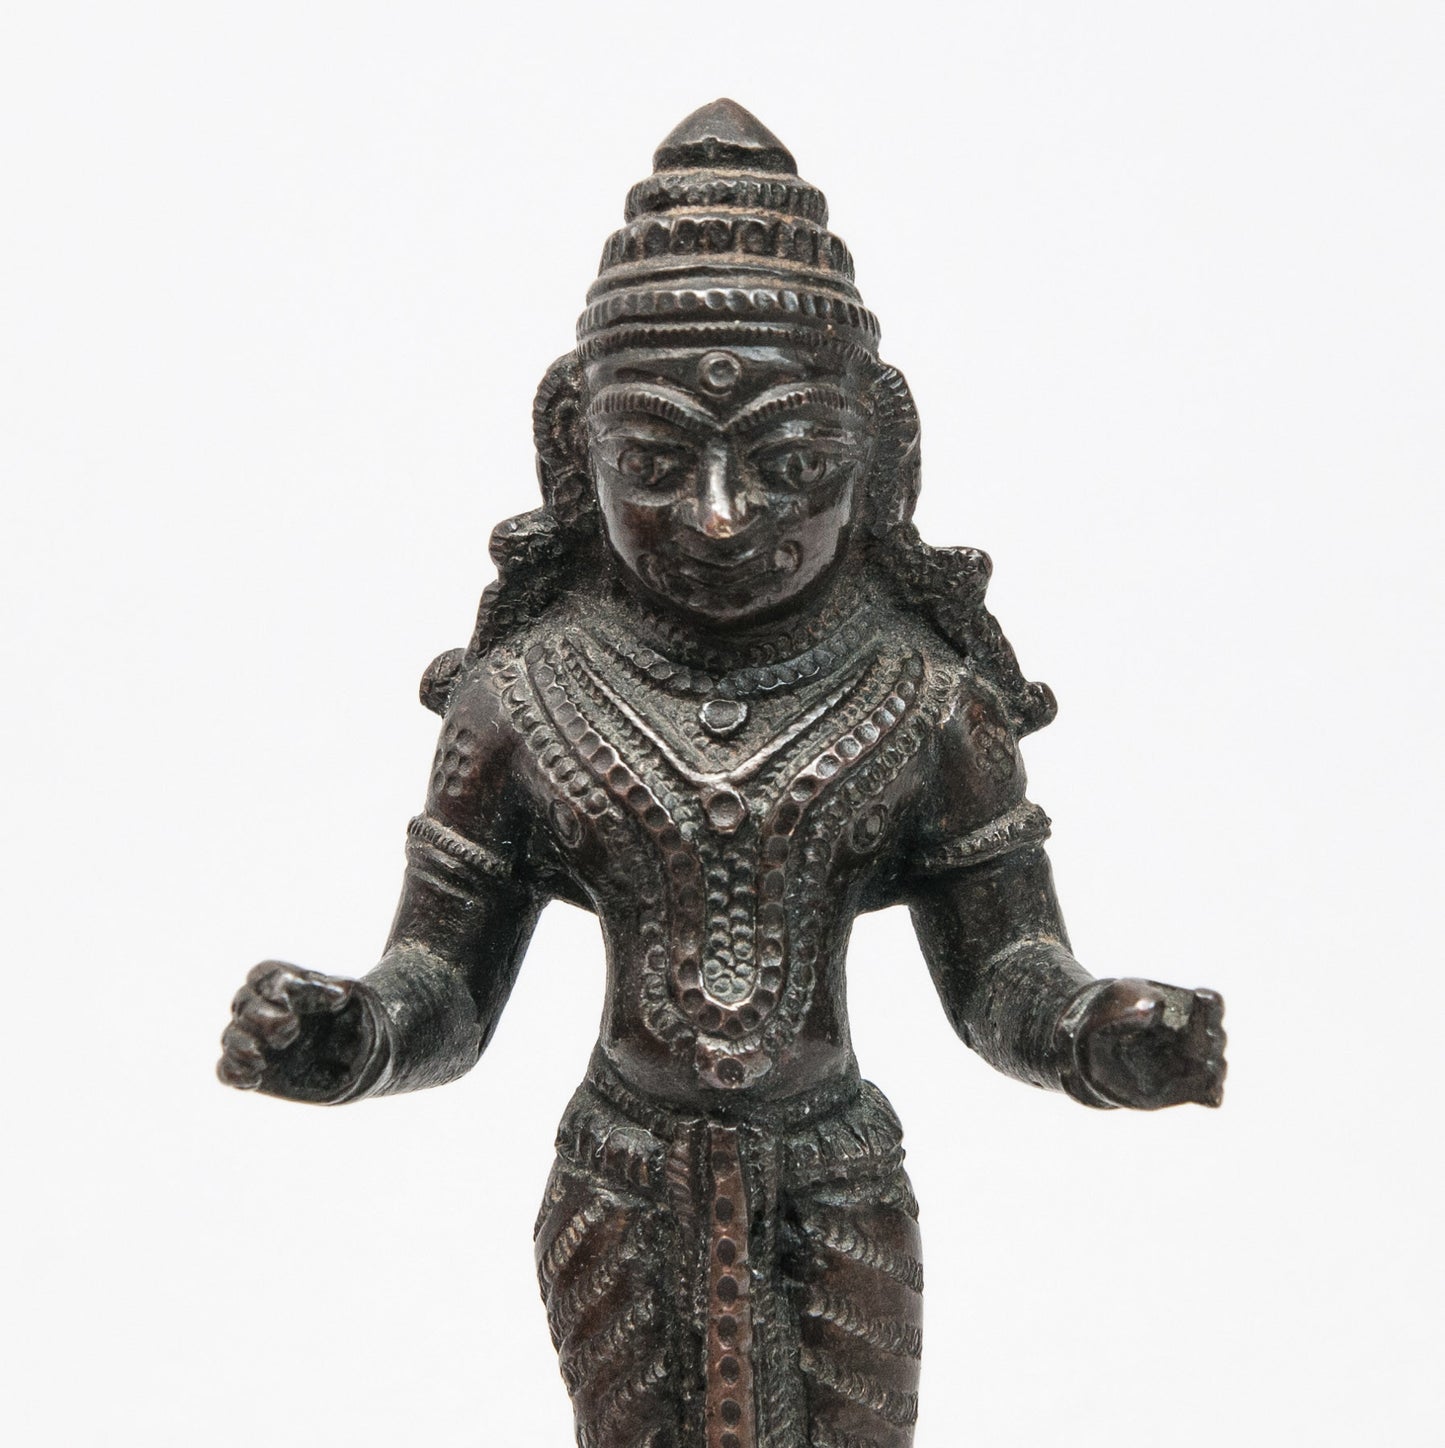 Antique Khmer Cambodian Cast Bronze Figure Statue of Uma Goddess of the Mountains (Code 0433)